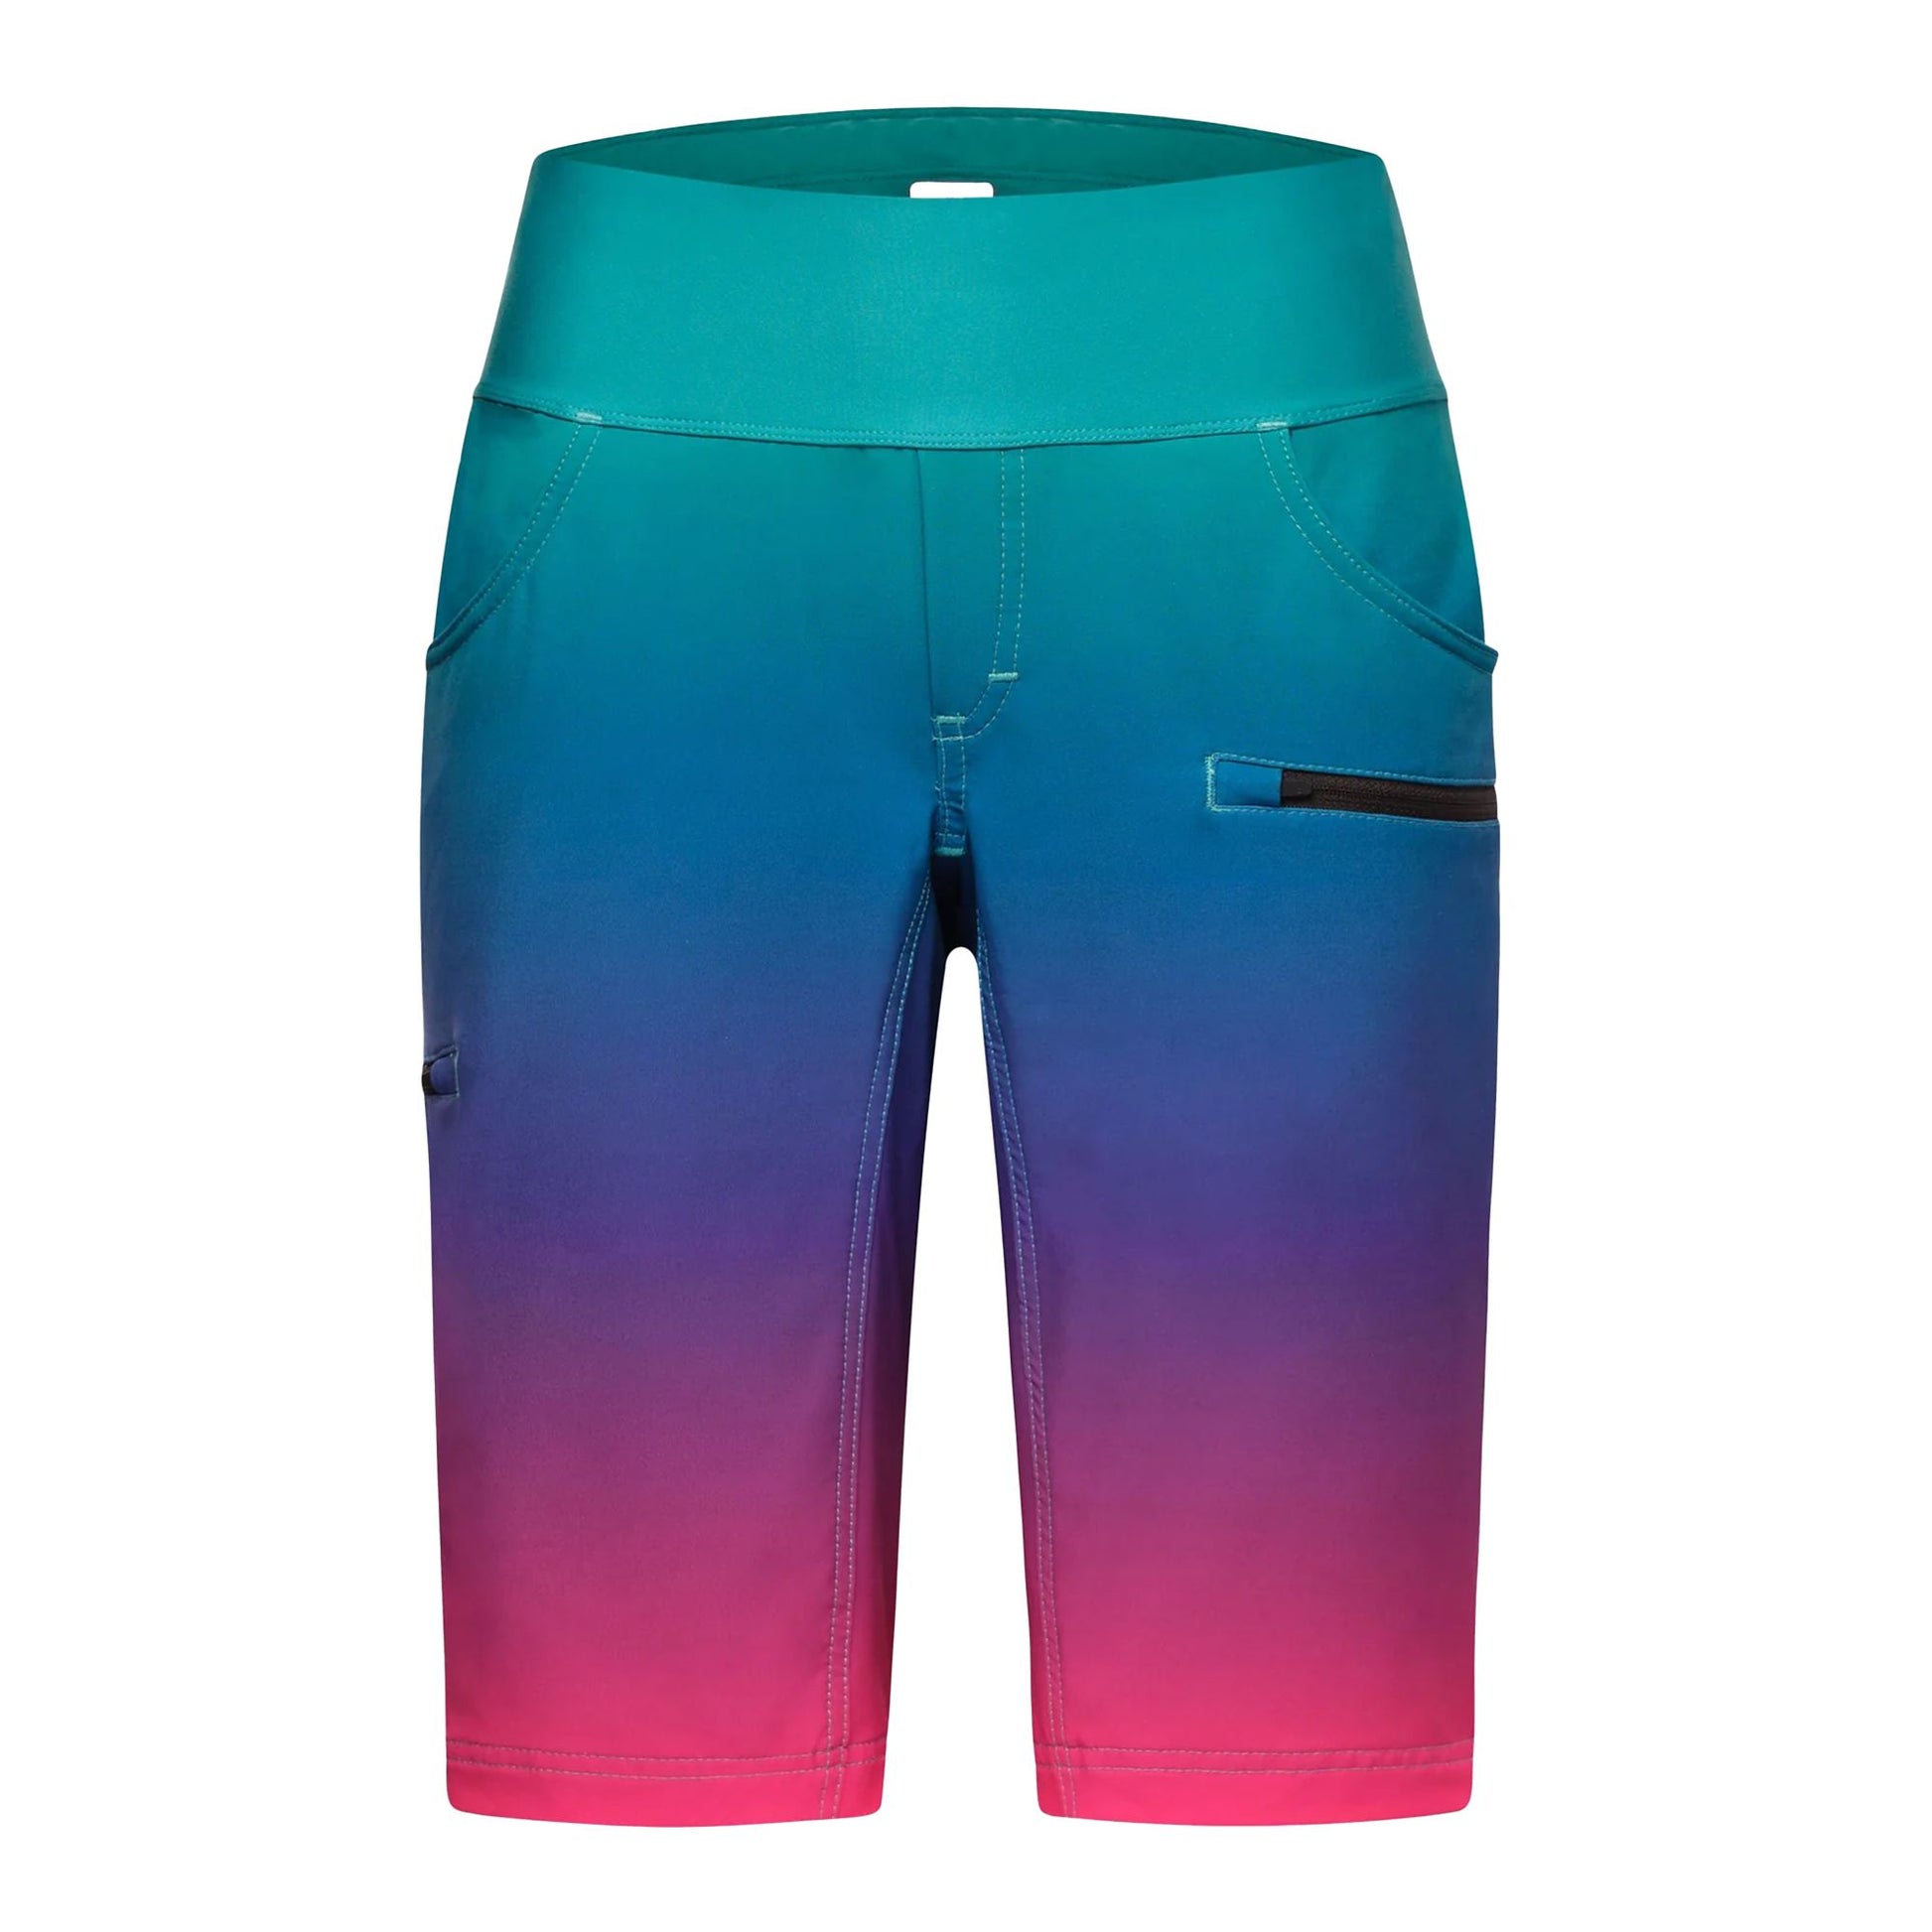 Shredly Women's Limitless 14" Stretch Waistband High-Rise Short Rainbow Ombre Bike Shorts